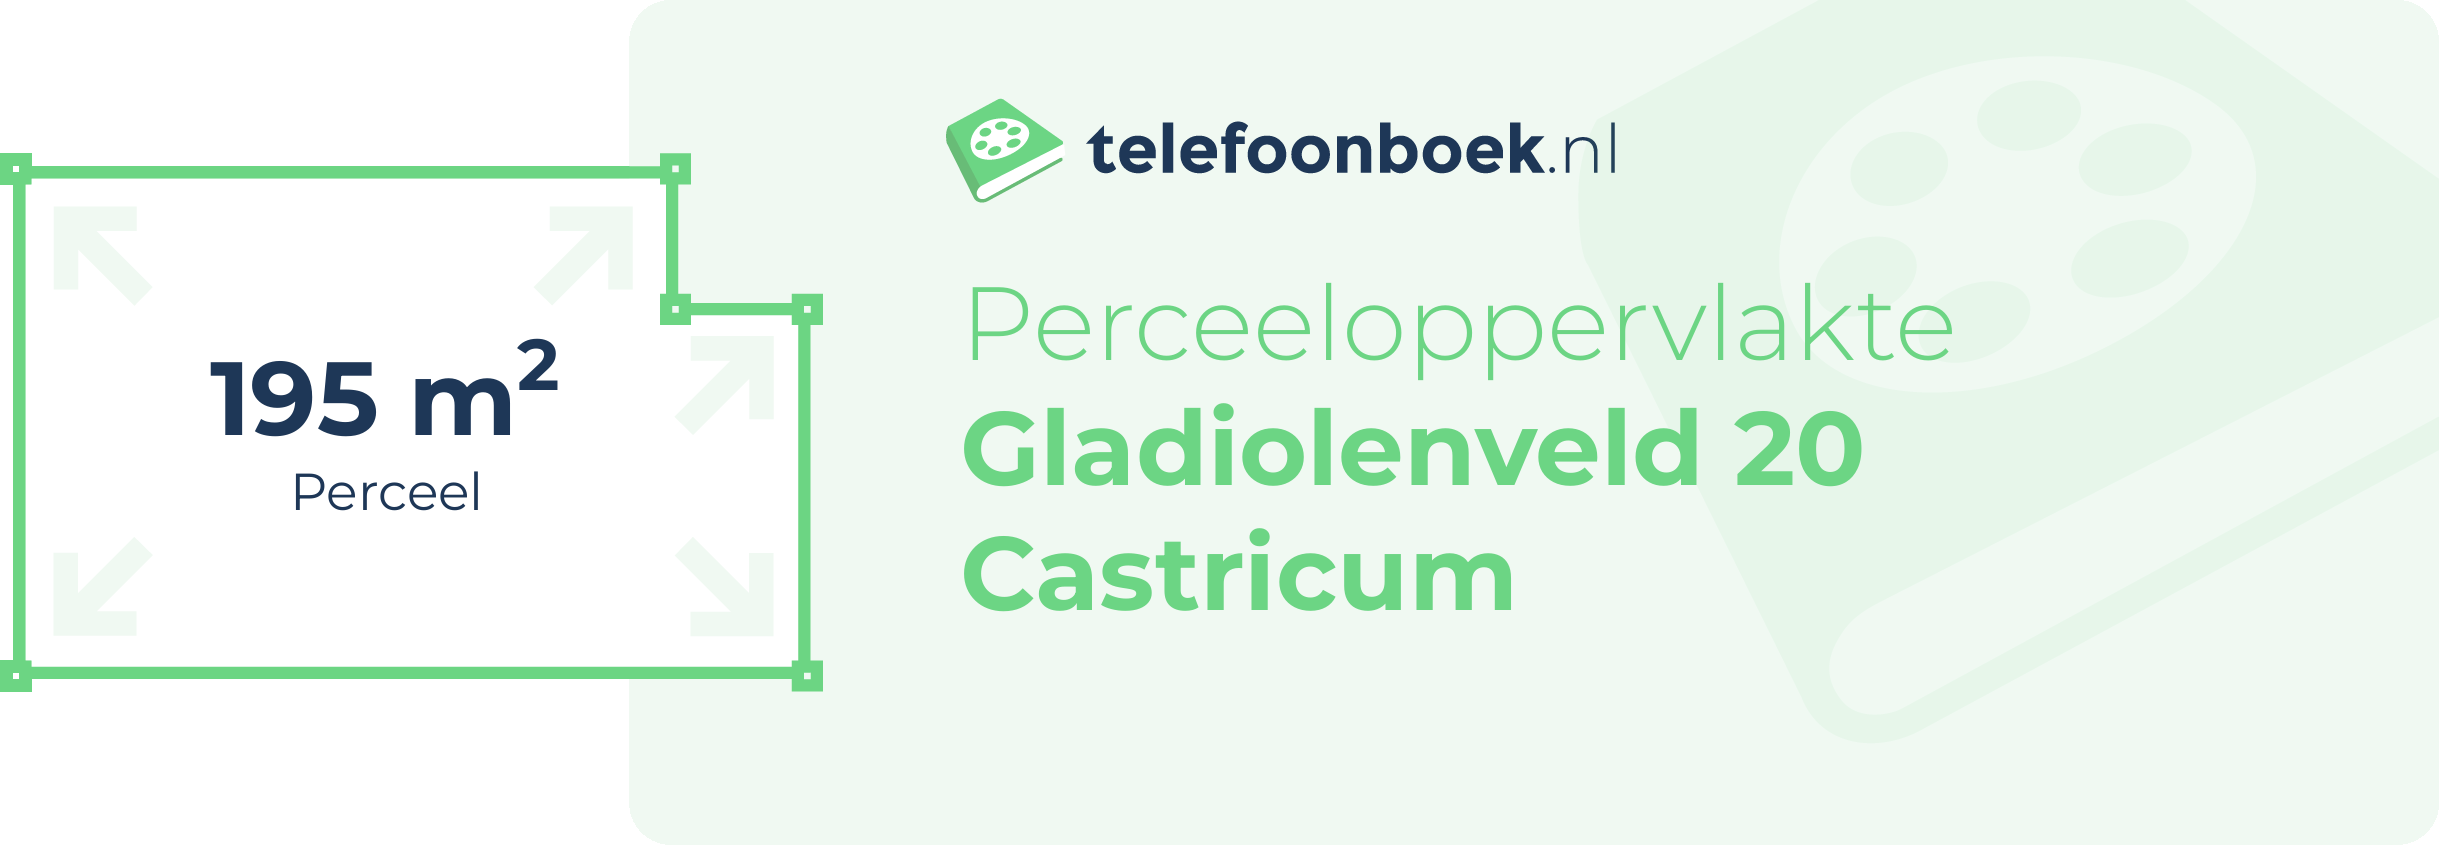 Perceeloppervlakte Gladiolenveld 20 Castricum